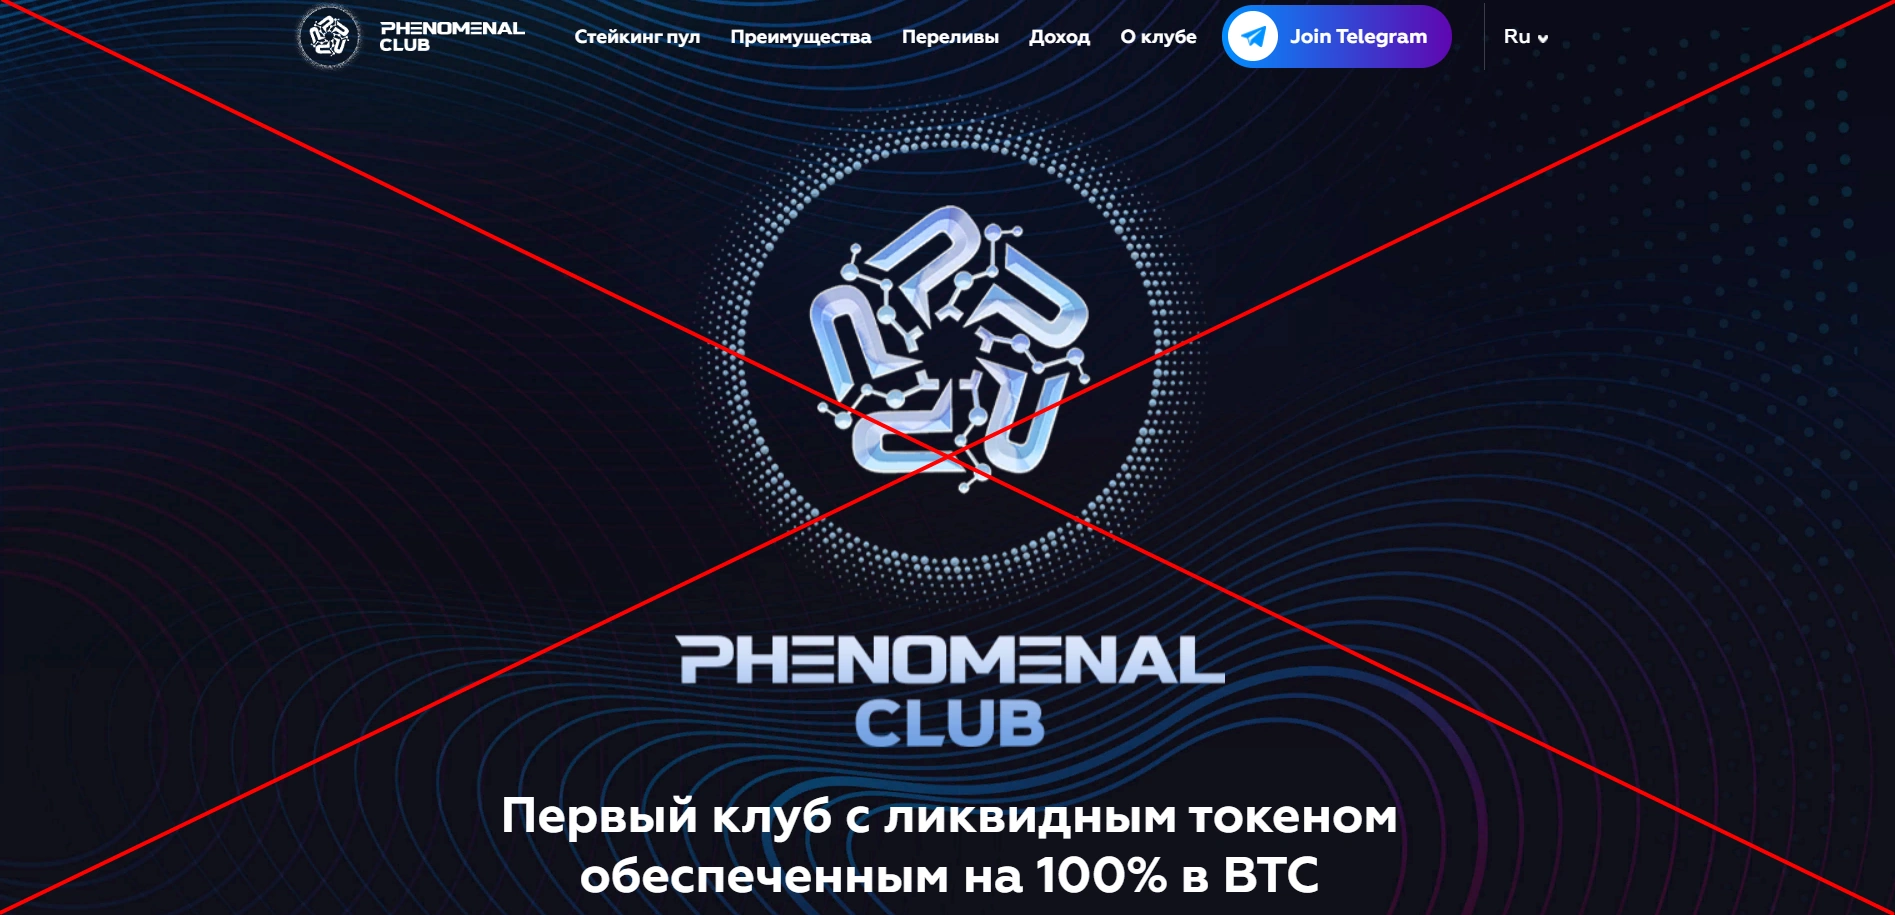 Phenomenal Club - отзывы и маркетинг pnmtoken.com